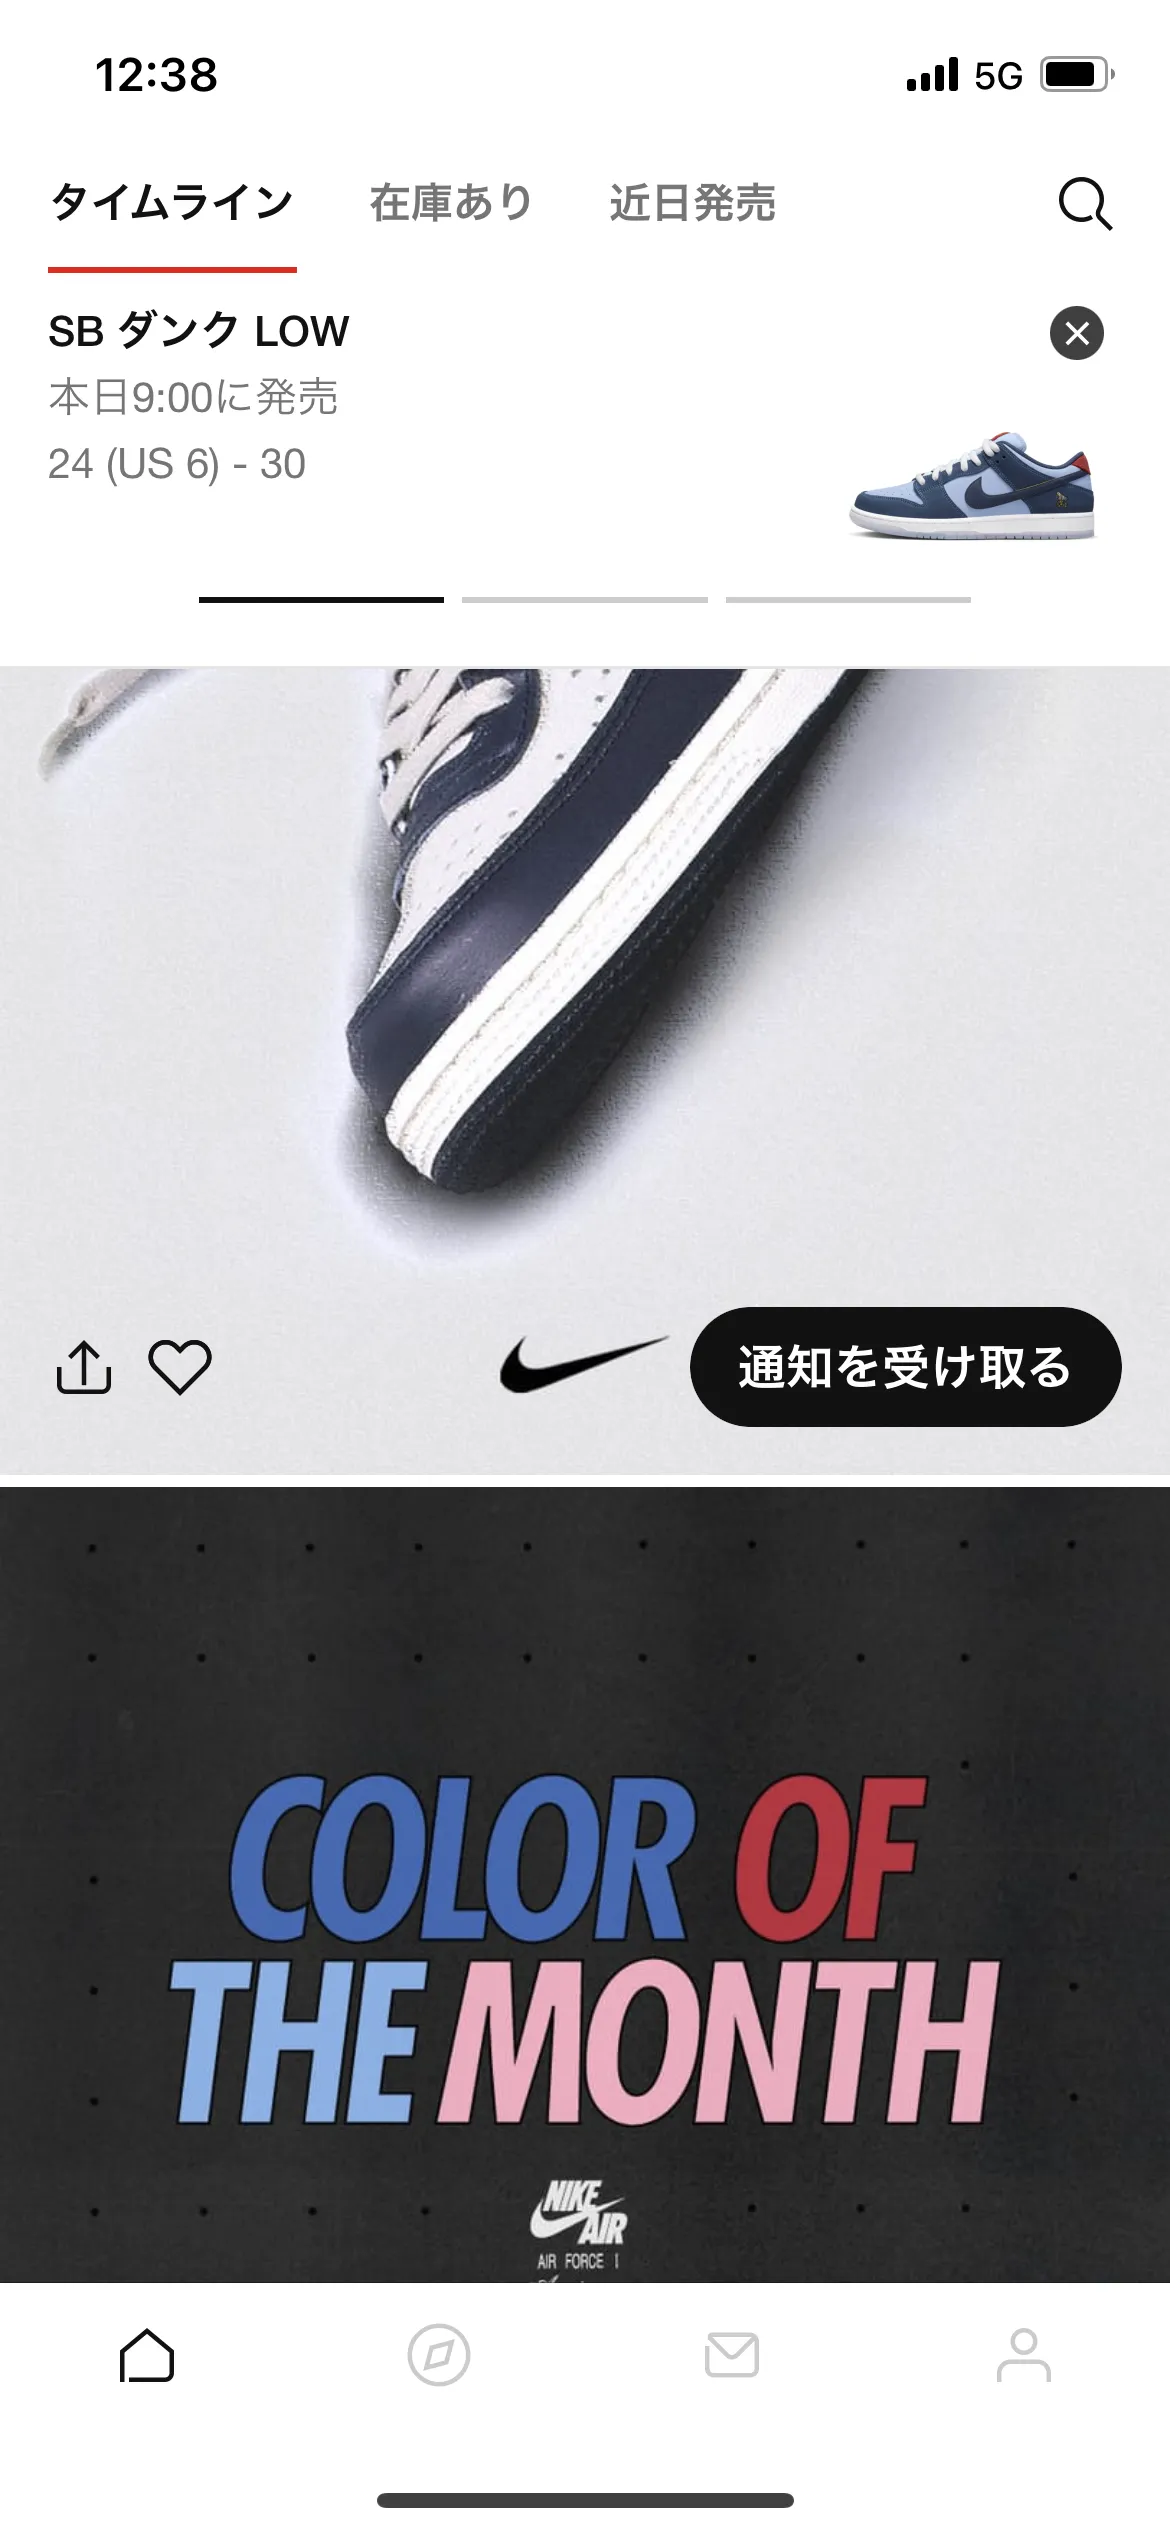 Nike SNKRS ホーム screen